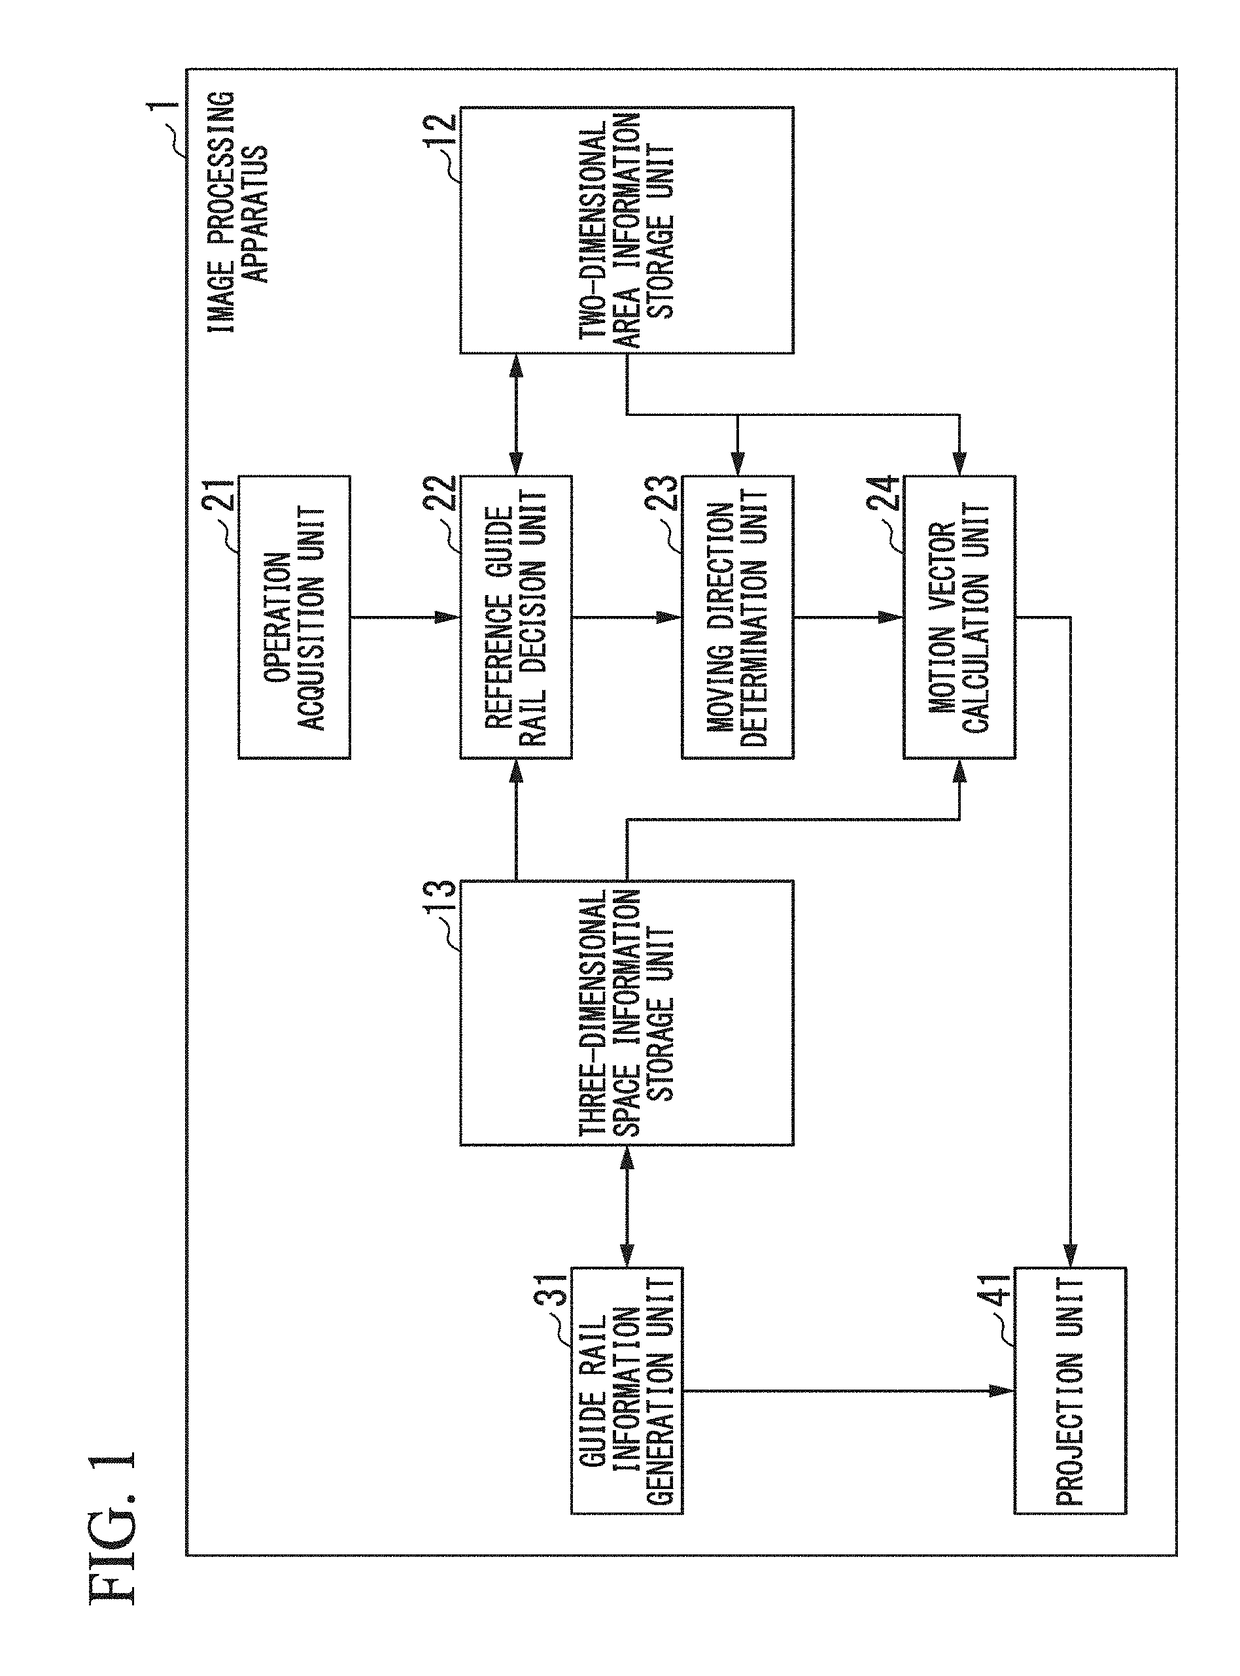 Image processing apparatus, image processing method, and program